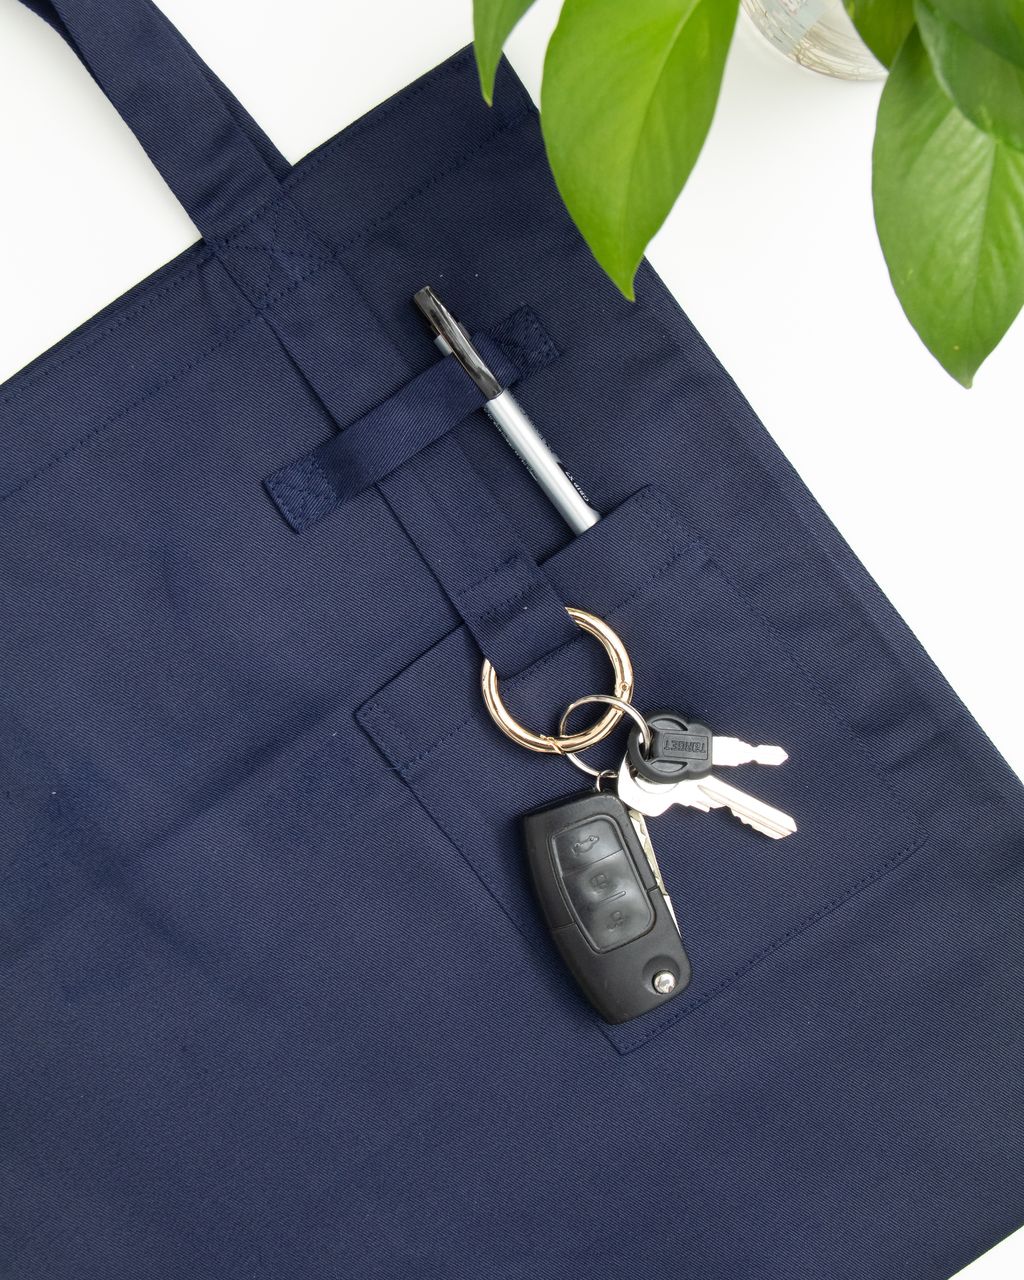 Handy Key Ring, Pen holder & Patch Pocket